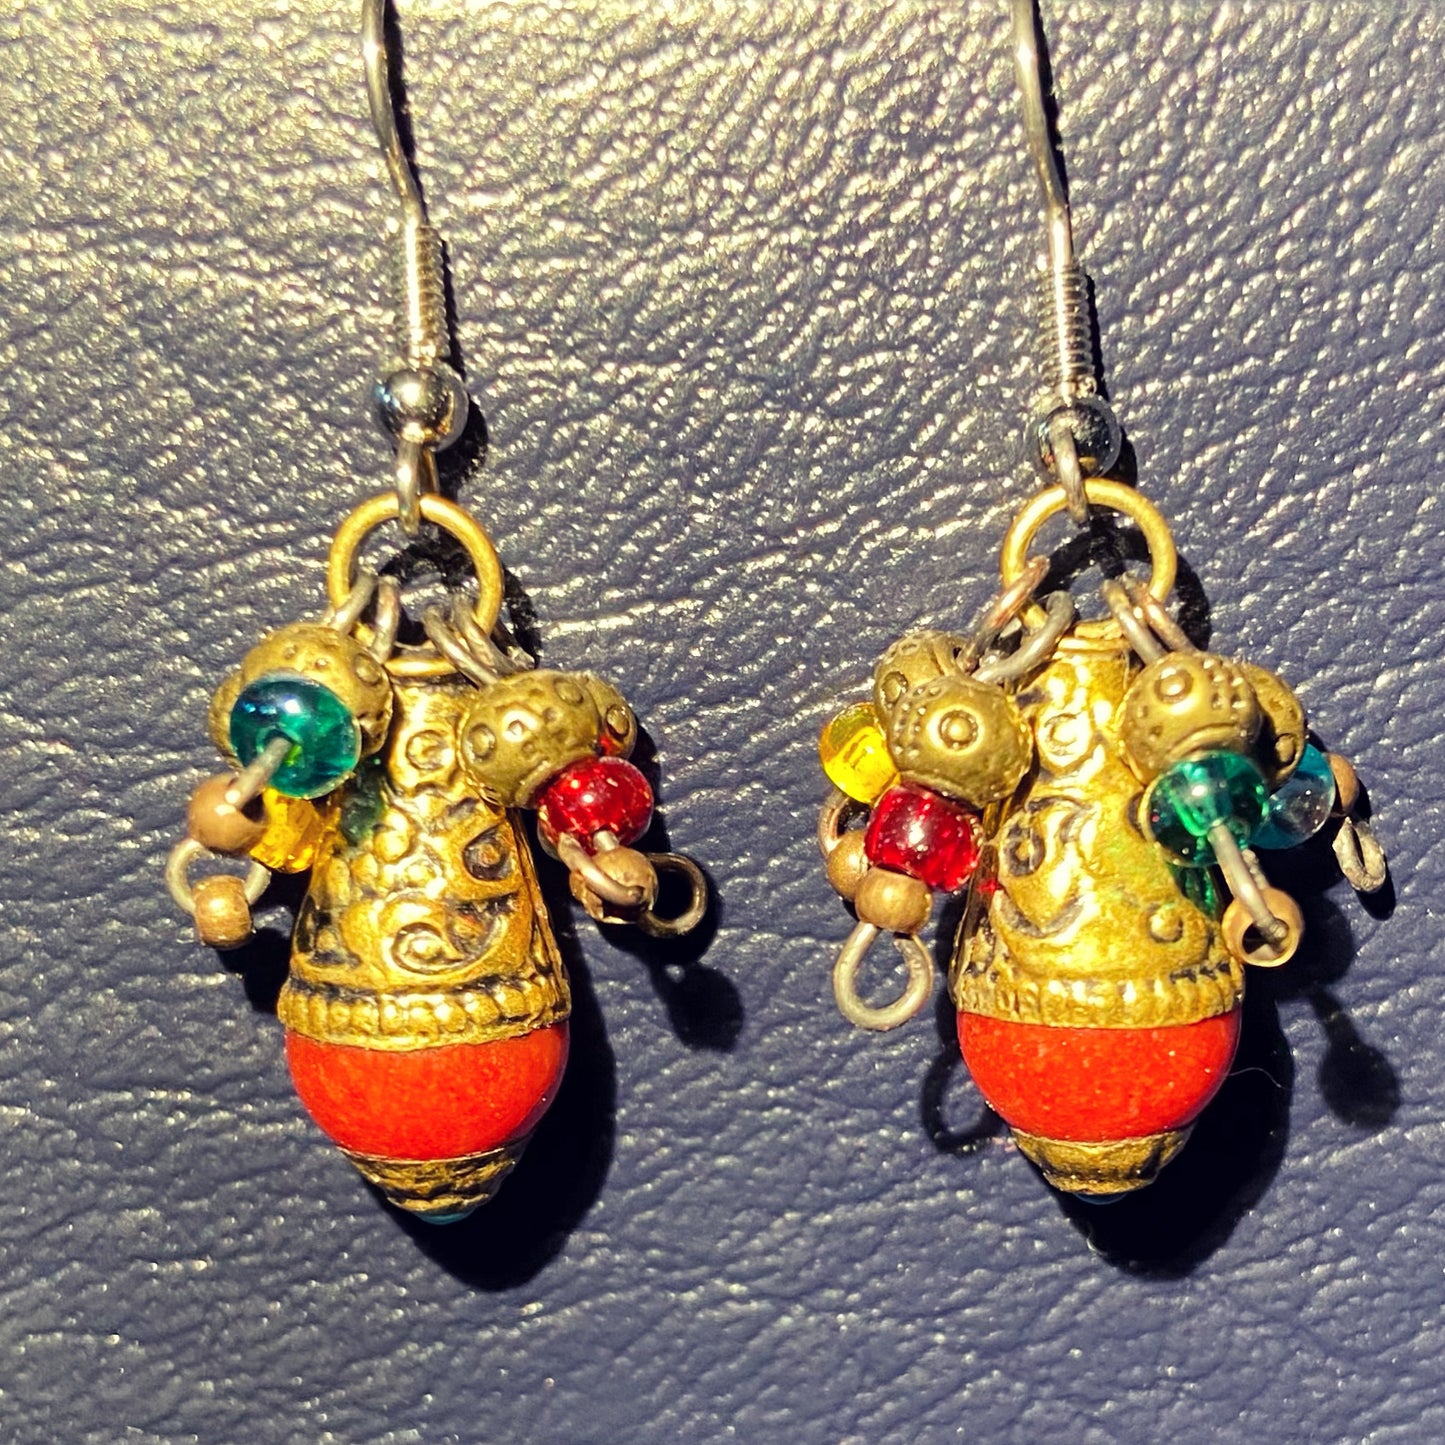 Beijo Earrings 5: TIbetan Handmade Beads, Metal & Czech Glass. Stainless Steel French Hooks